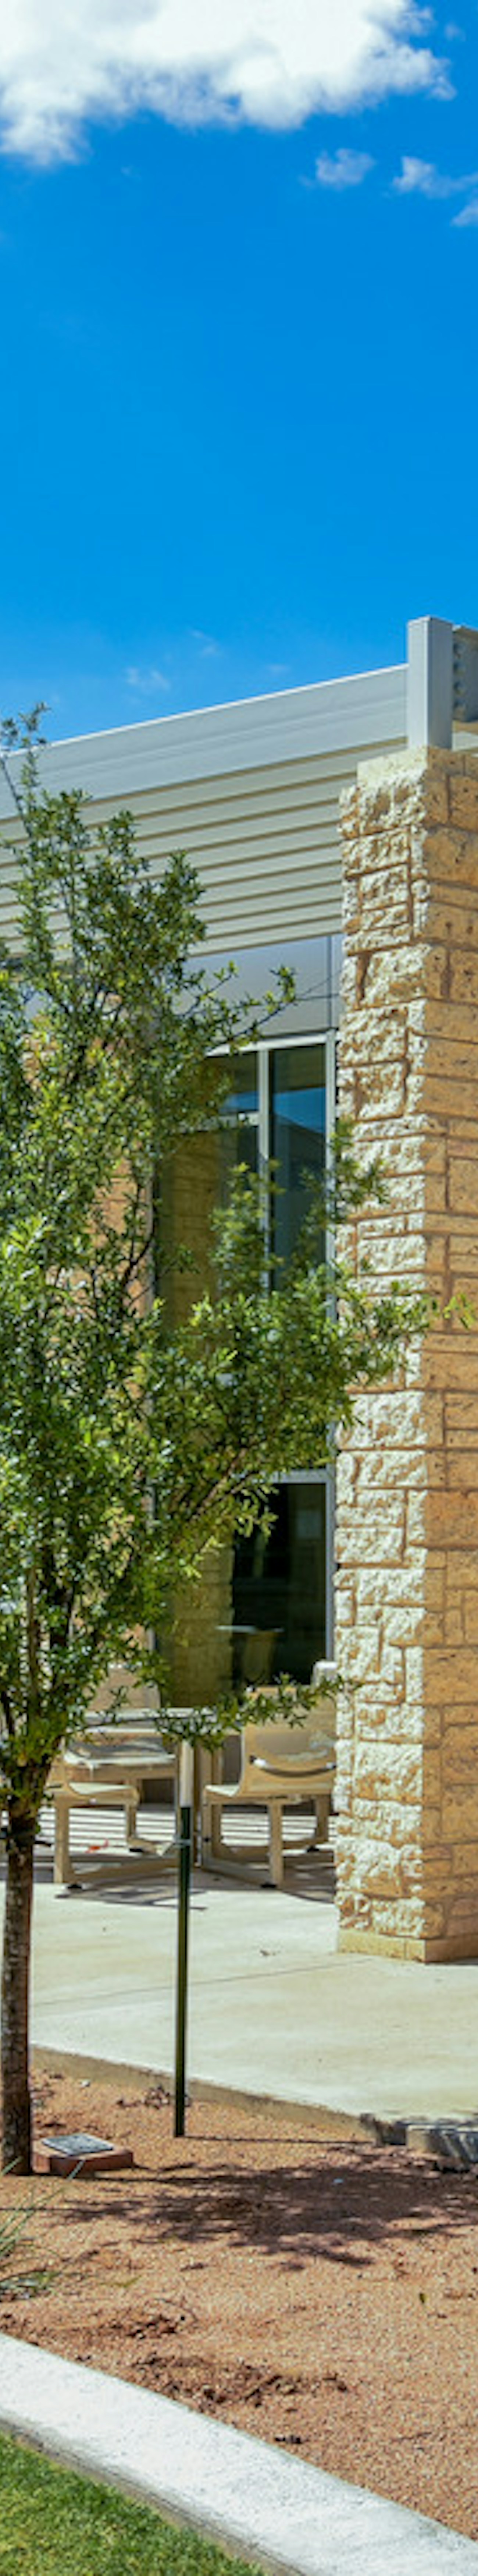                         Howard College San Angelo
                    